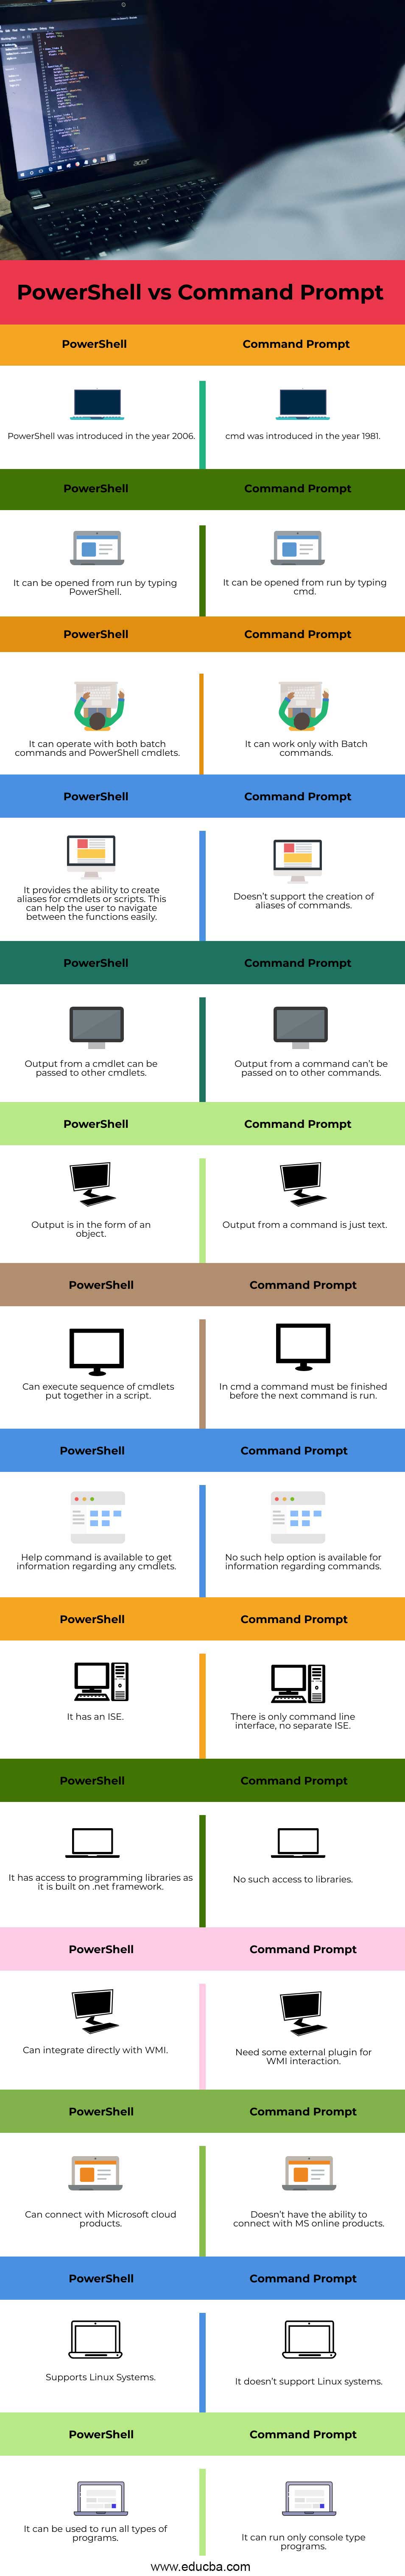 Powershell-vs-command-prompt-info